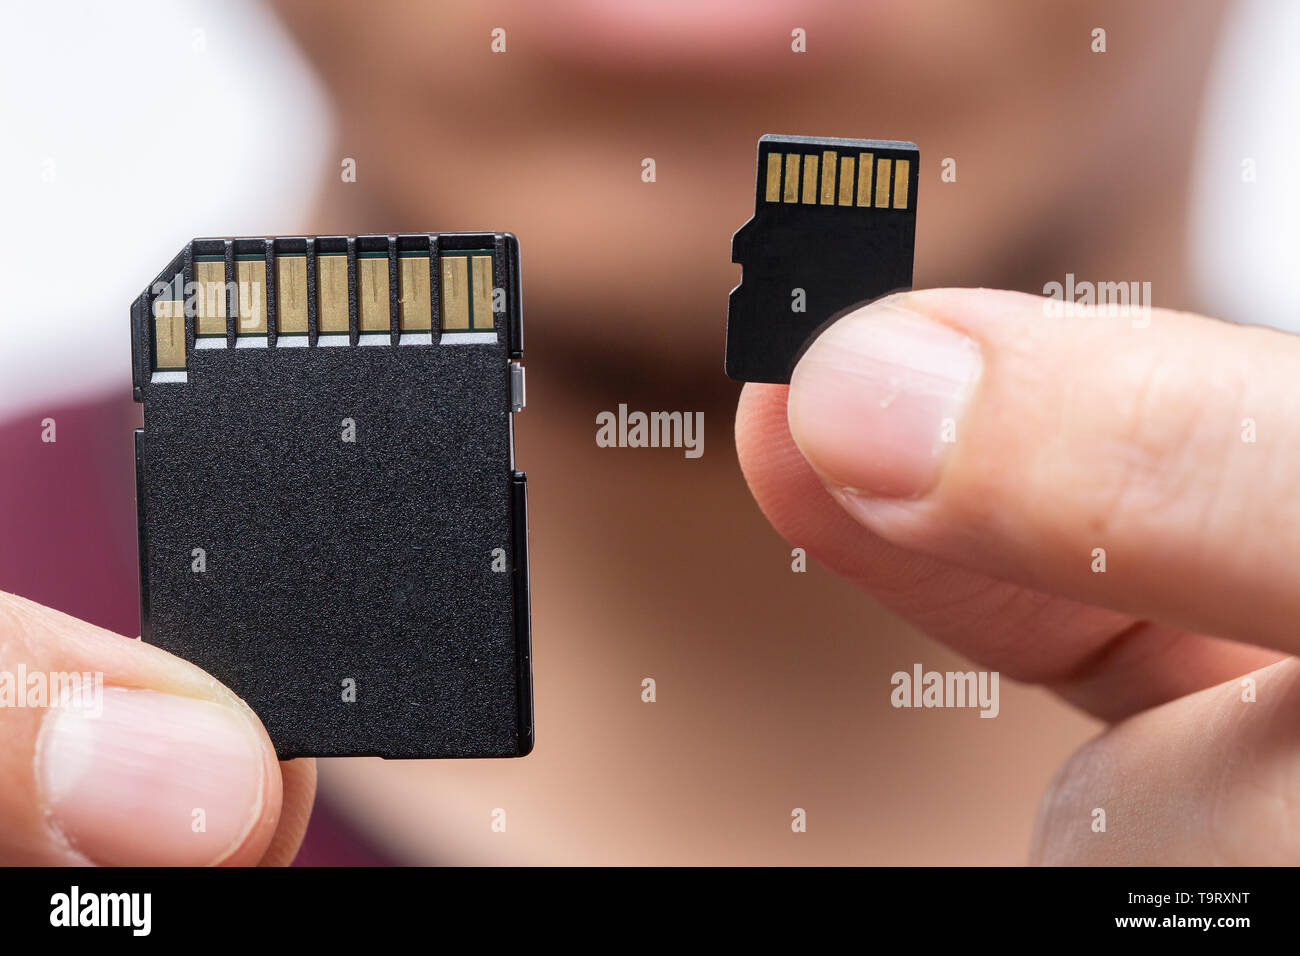 Memory Card, Micro SD Card